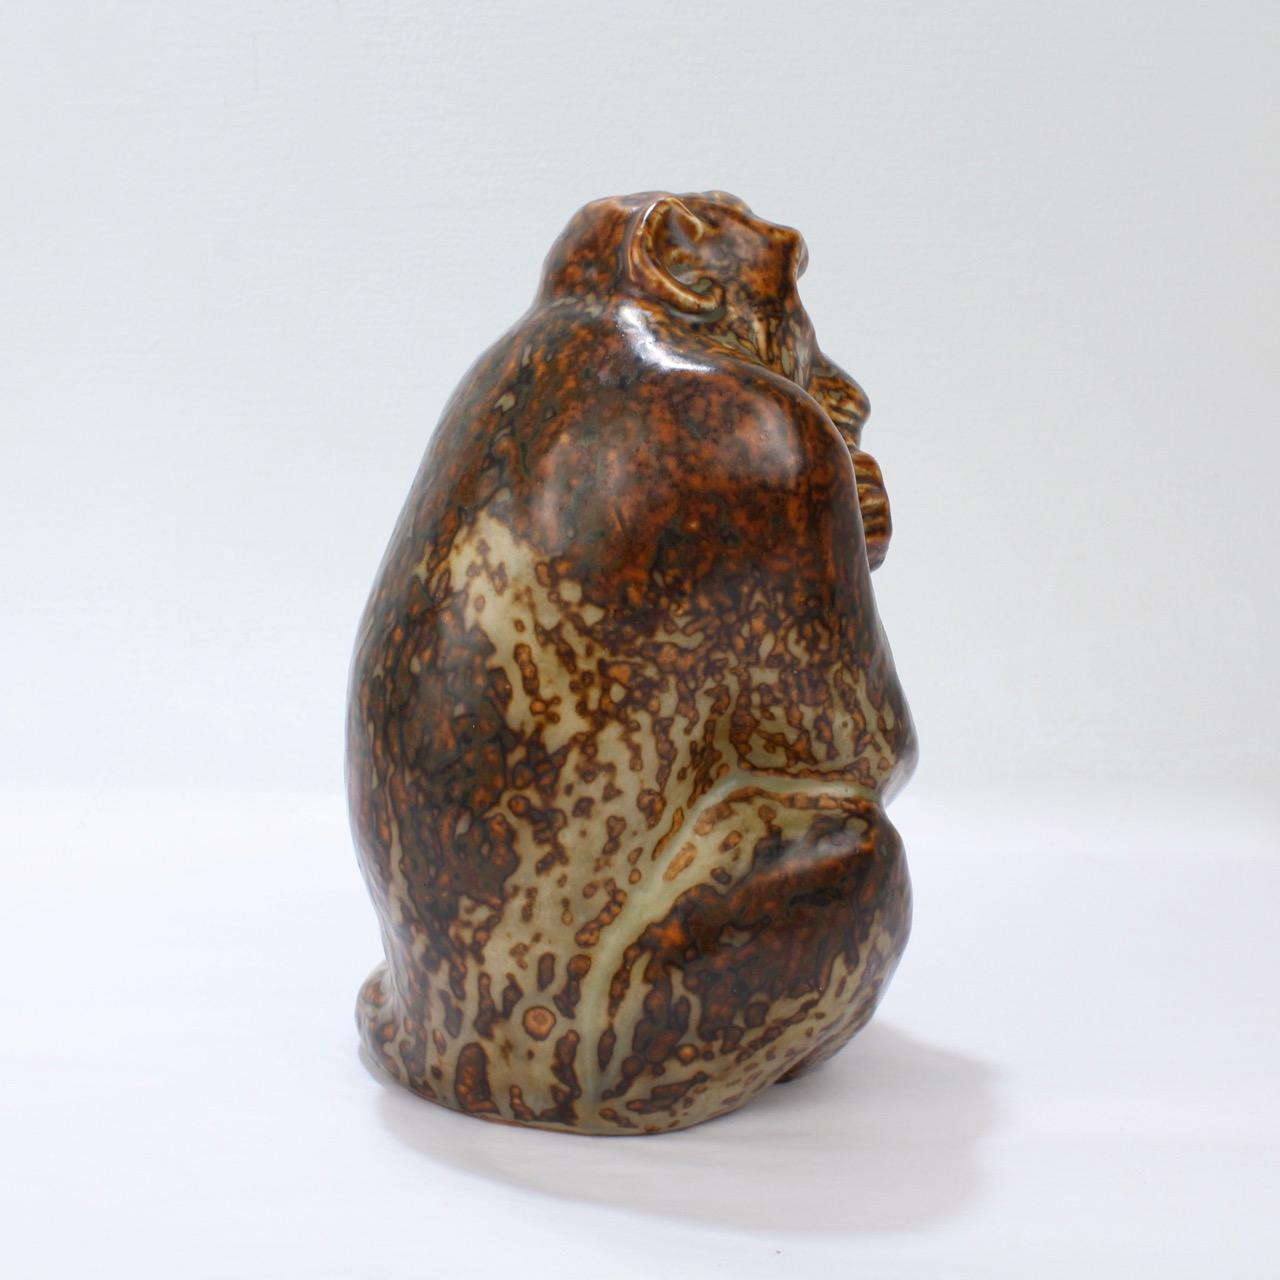 Vintage Stoneware Pottery Monkey Figurine by Knud Khyn for Royal Copenhagen For Sale 1